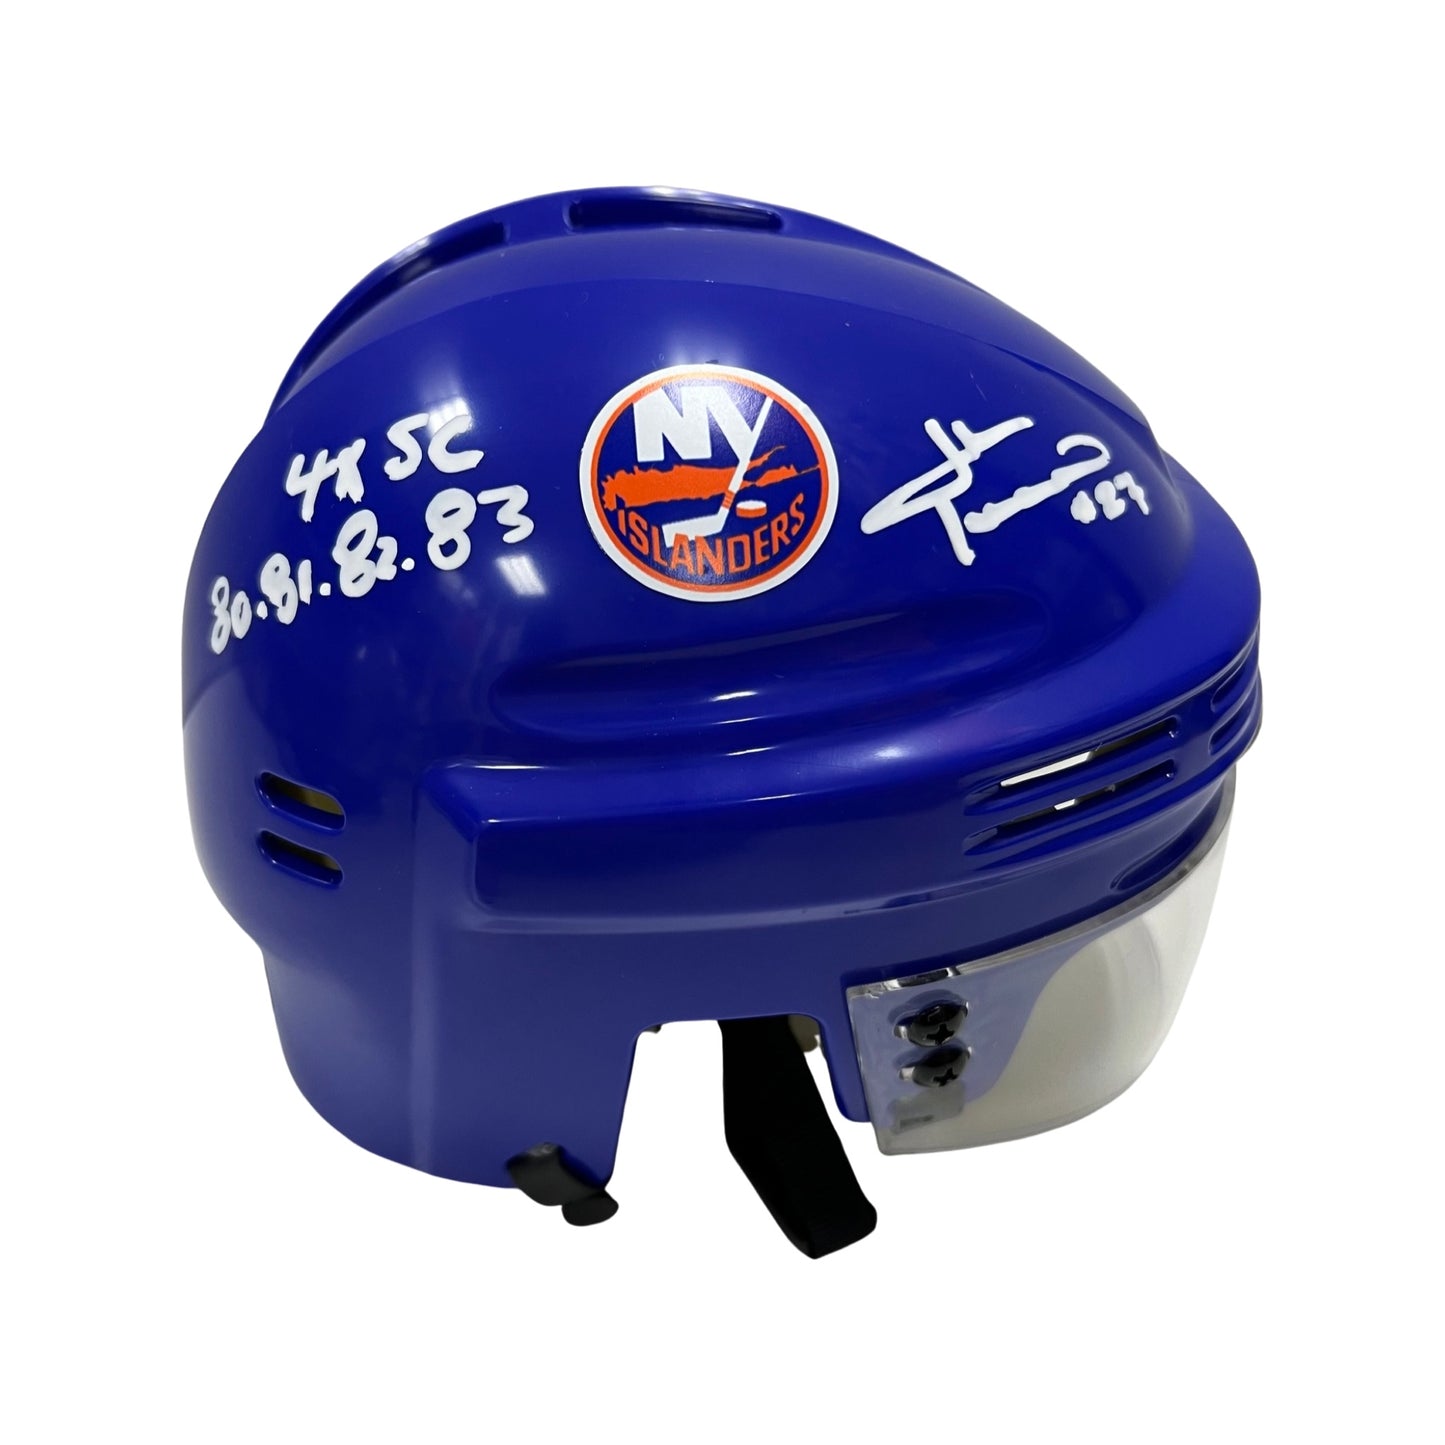 John Tonelli Autographed New York Islanders Blue Mini Helmet “4x SC 80, 81, 82, 83” Inscription Steiner CX